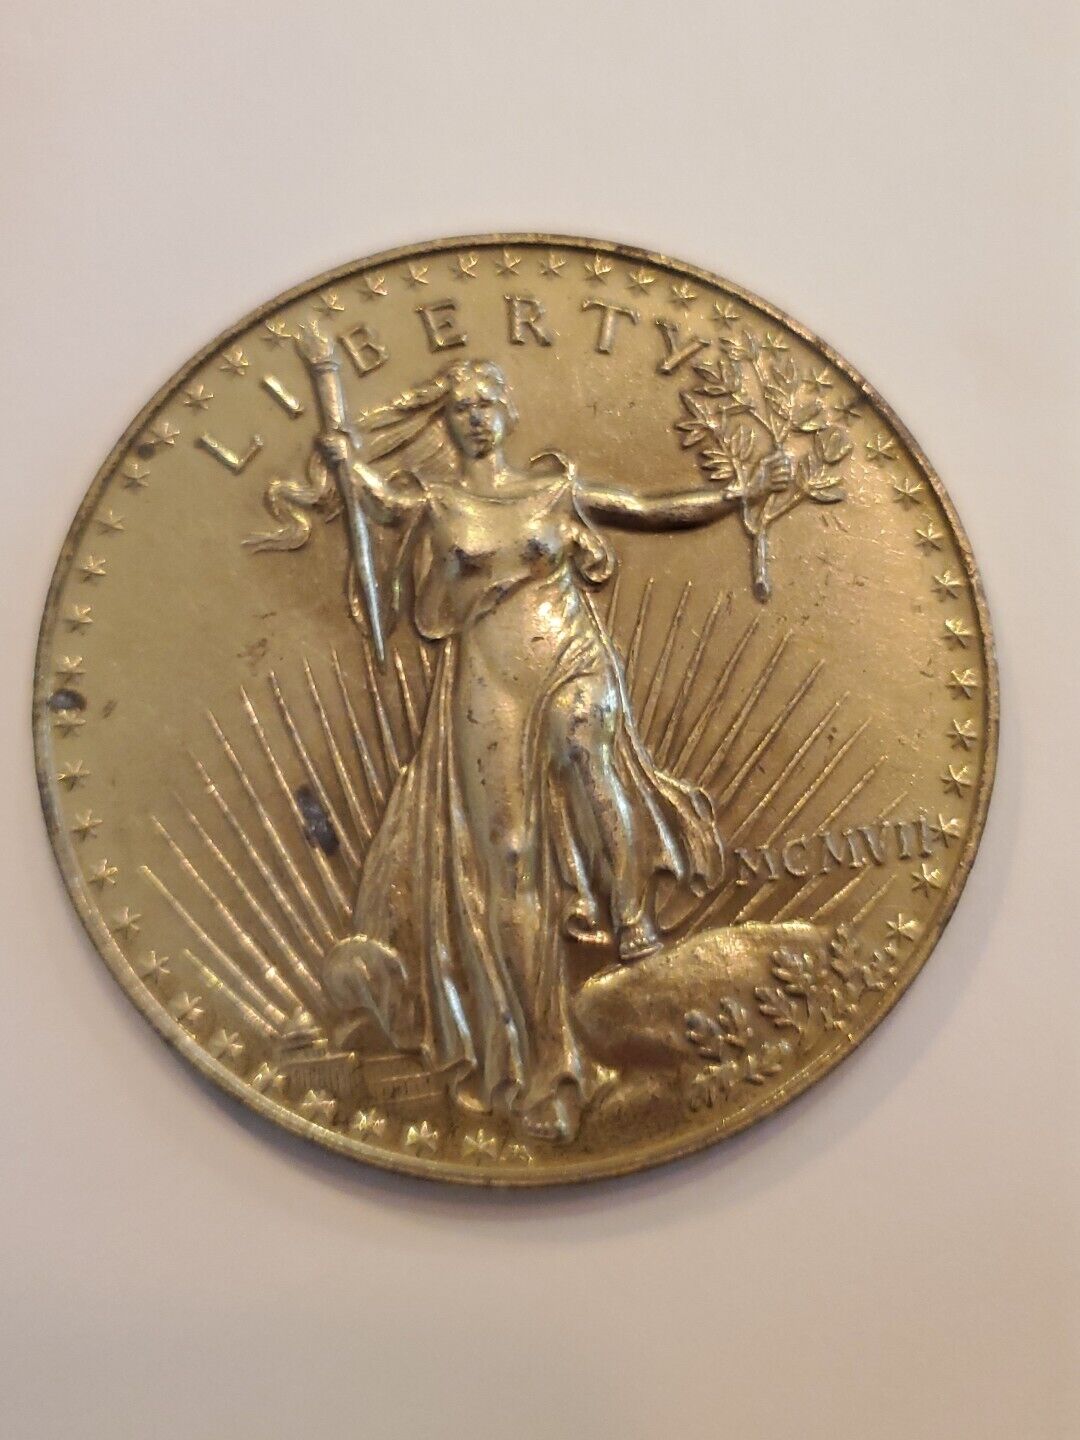 Vintage Liberty MCMVII USA Twenty Dollar Replica Coin (Item A)